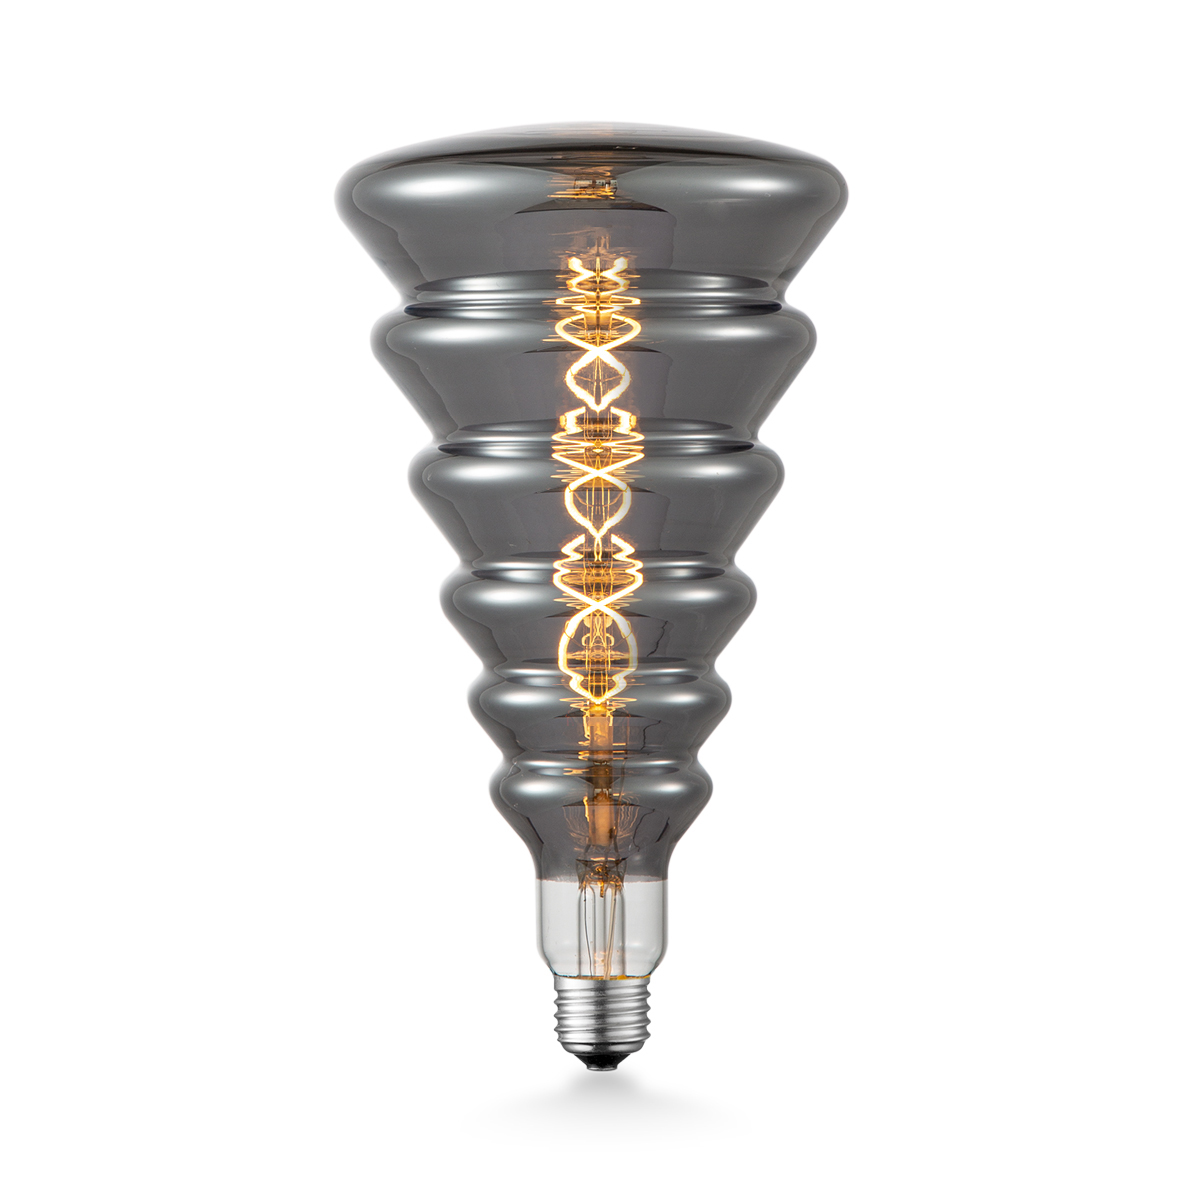 Tangla lighting - TLB-8056-04TM - LED Light Bulb Single Spiral filament - special 4W titanium - tower - dimmable - E27